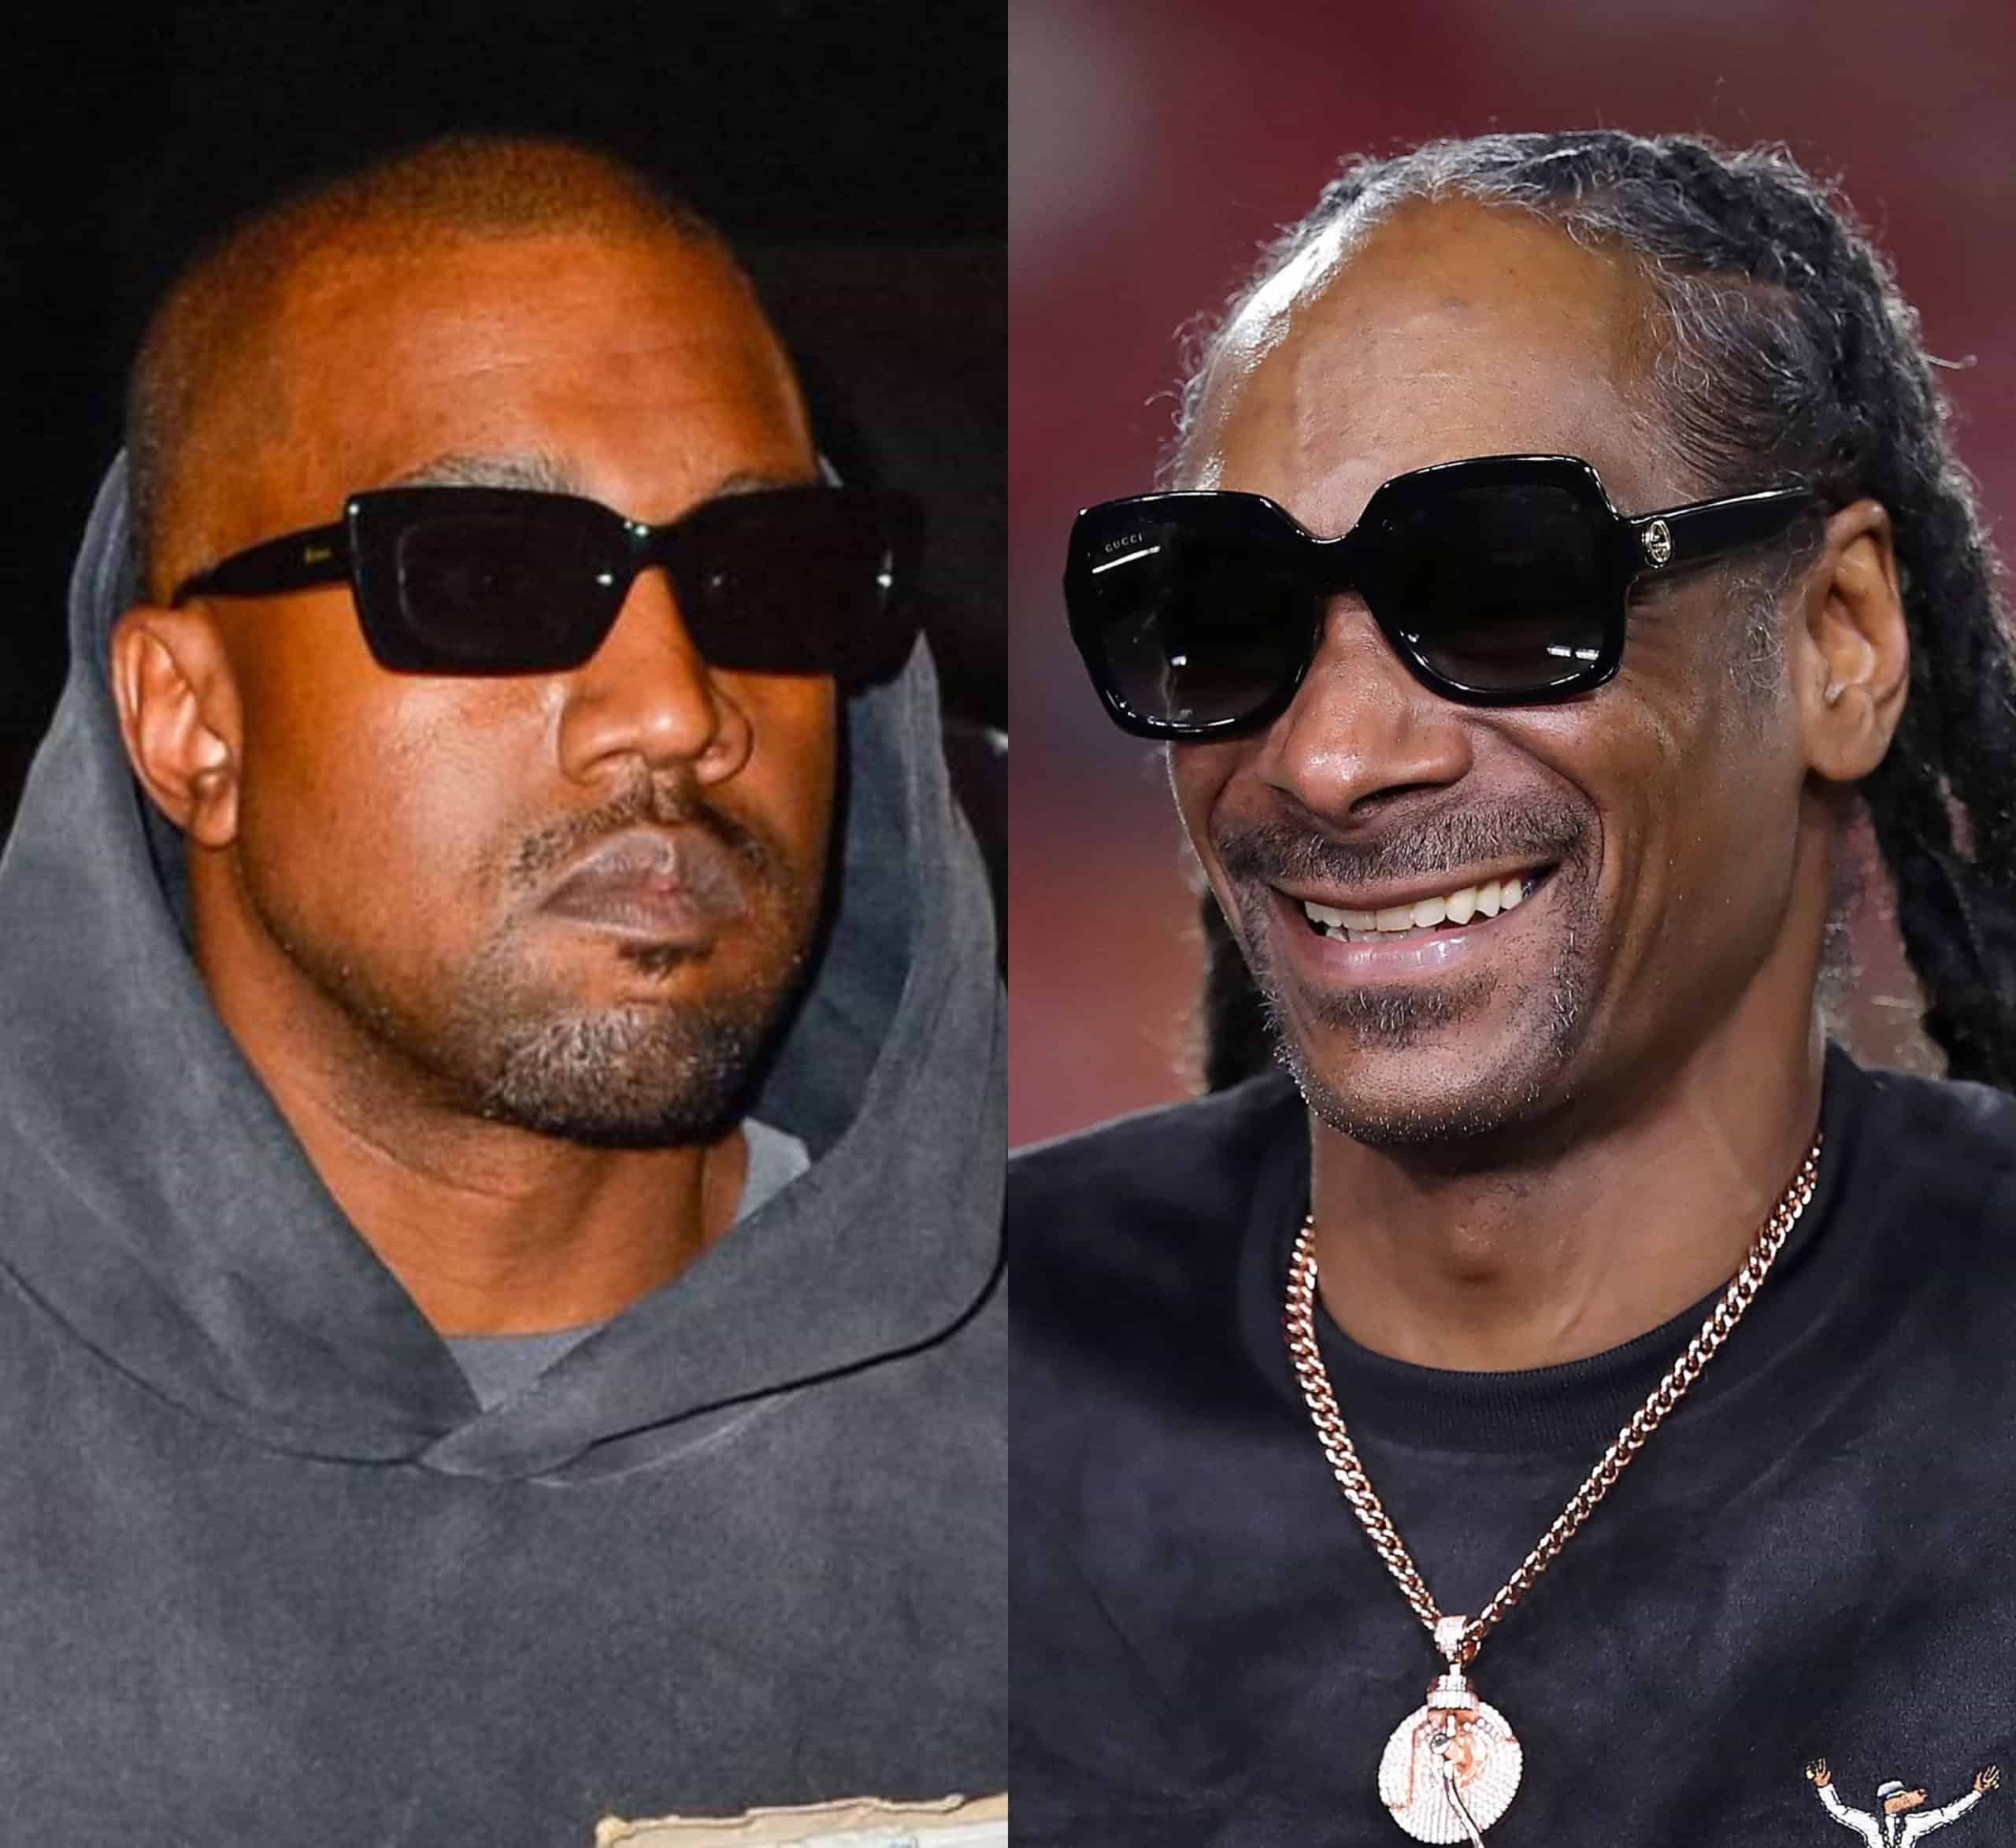 Snoop Dogg Mocks Kanye West's Boots: "I'll Never Wear Them Motherf#*kers"